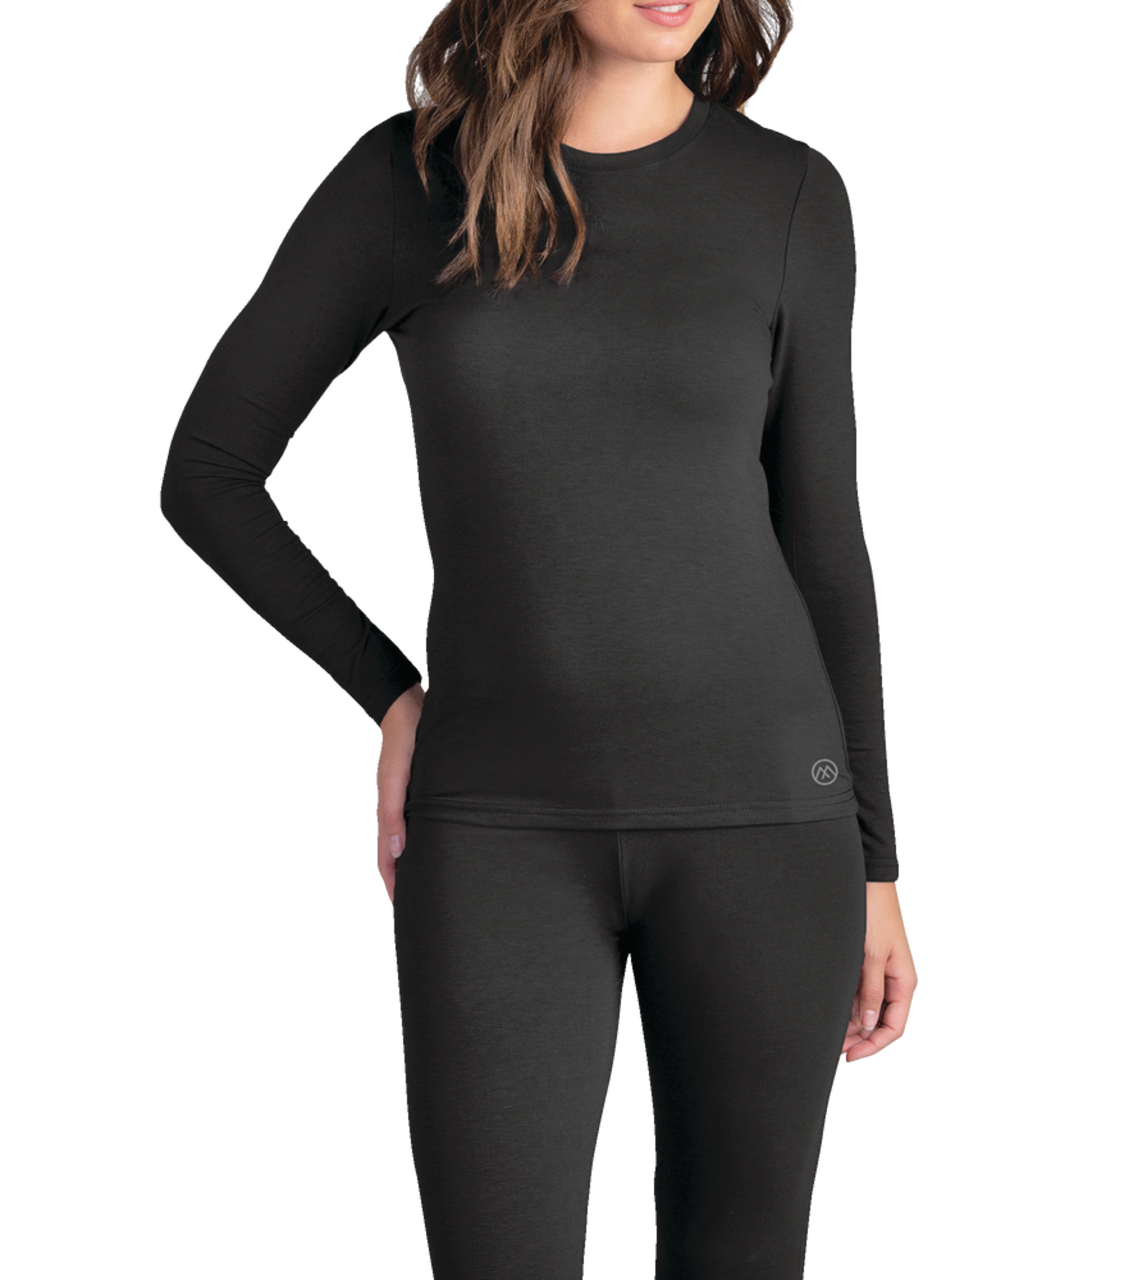 Women's Kombi Thermal Long-Sleeve Shirt